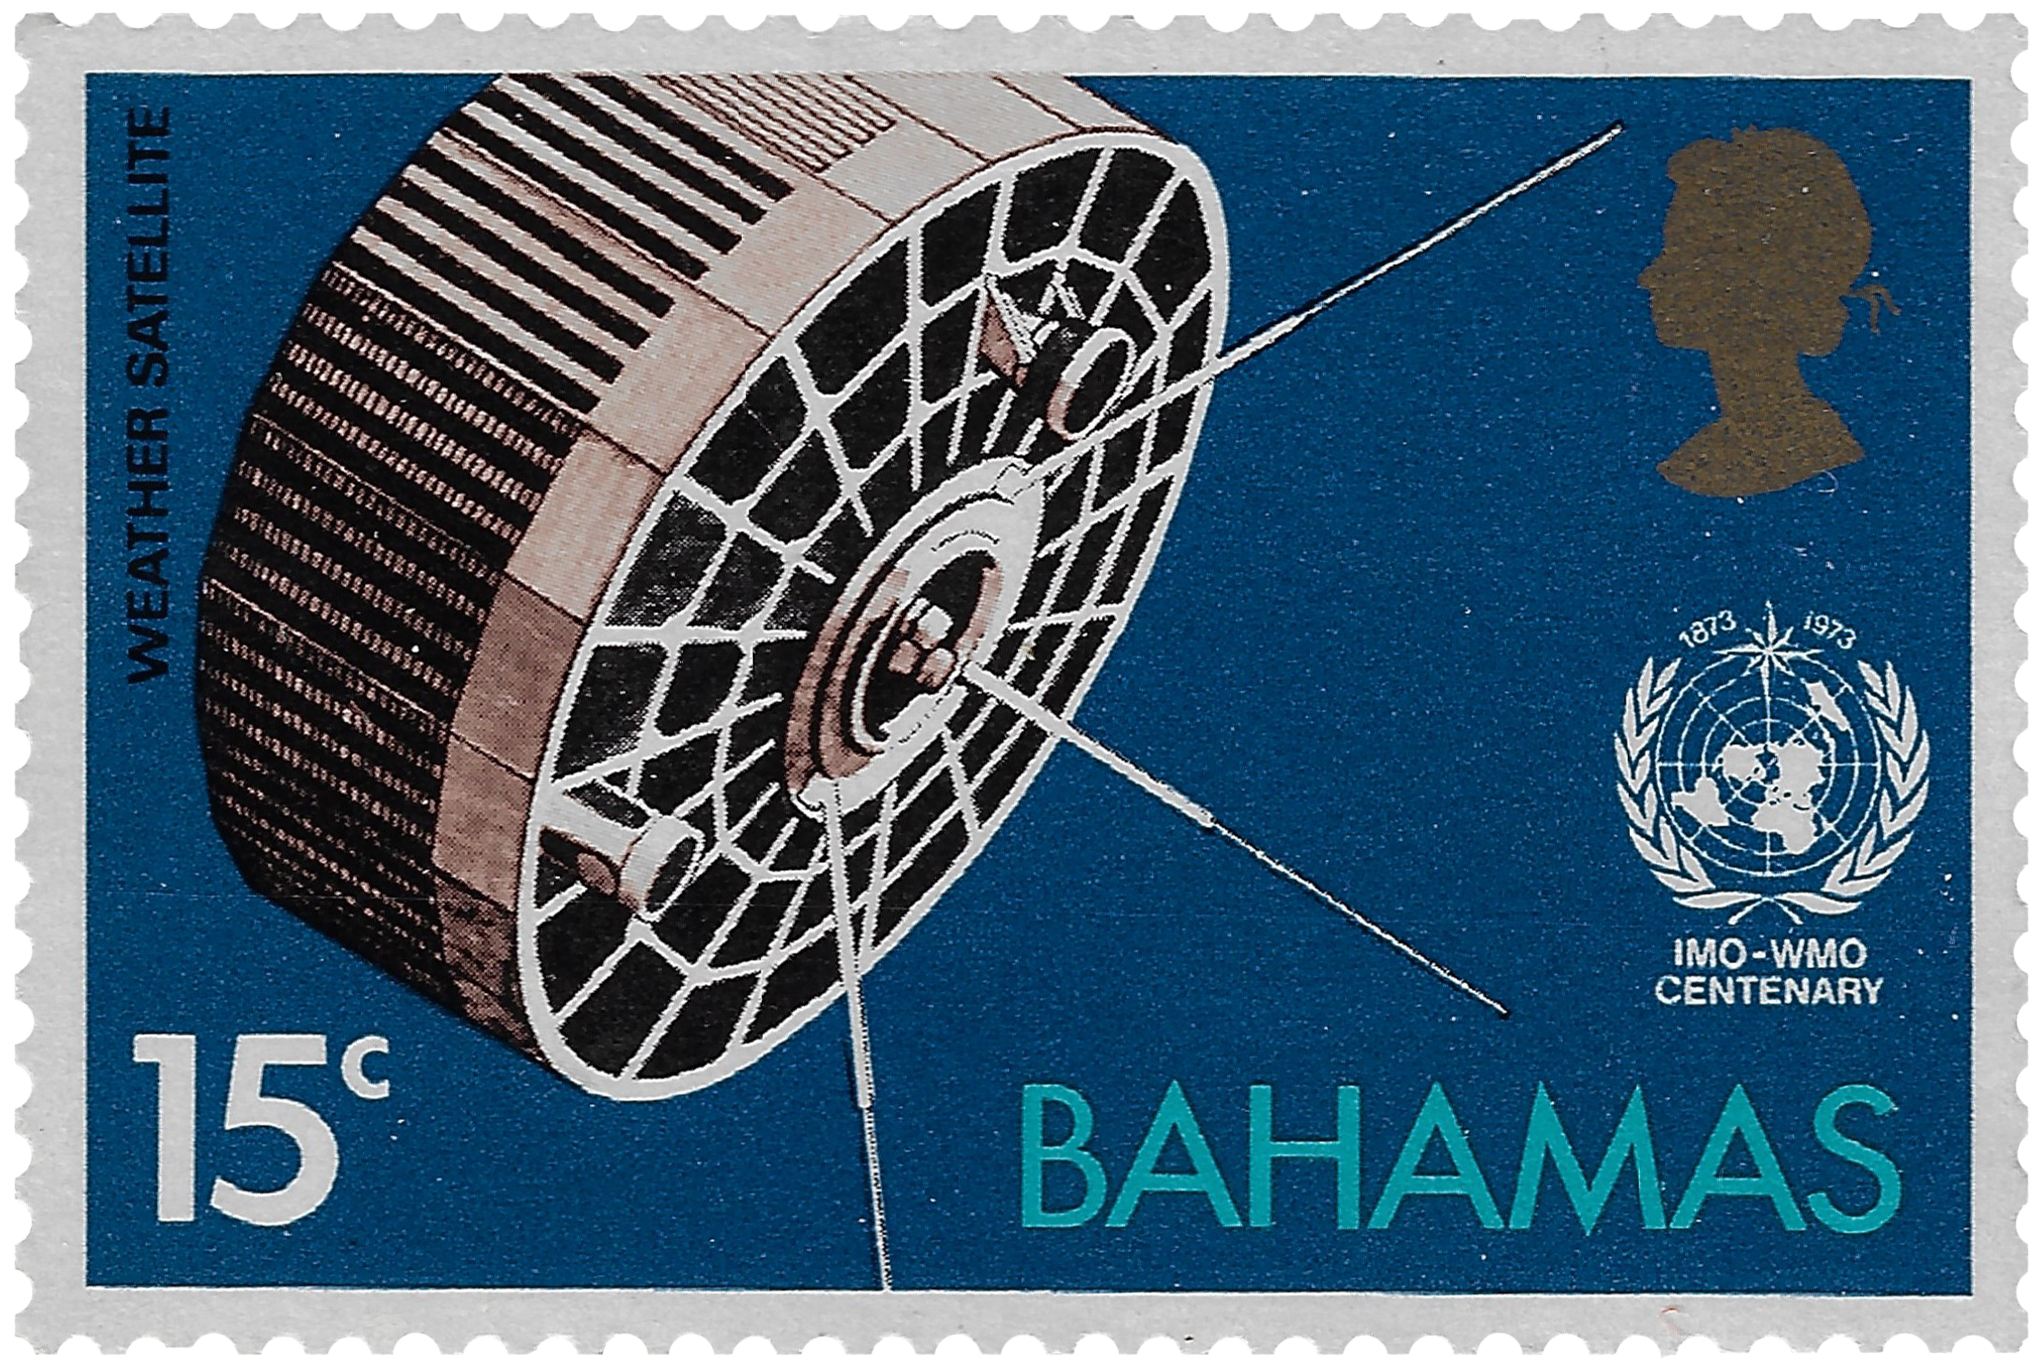 15c 1973, Weather Satellite, IMO-WMO Centenary